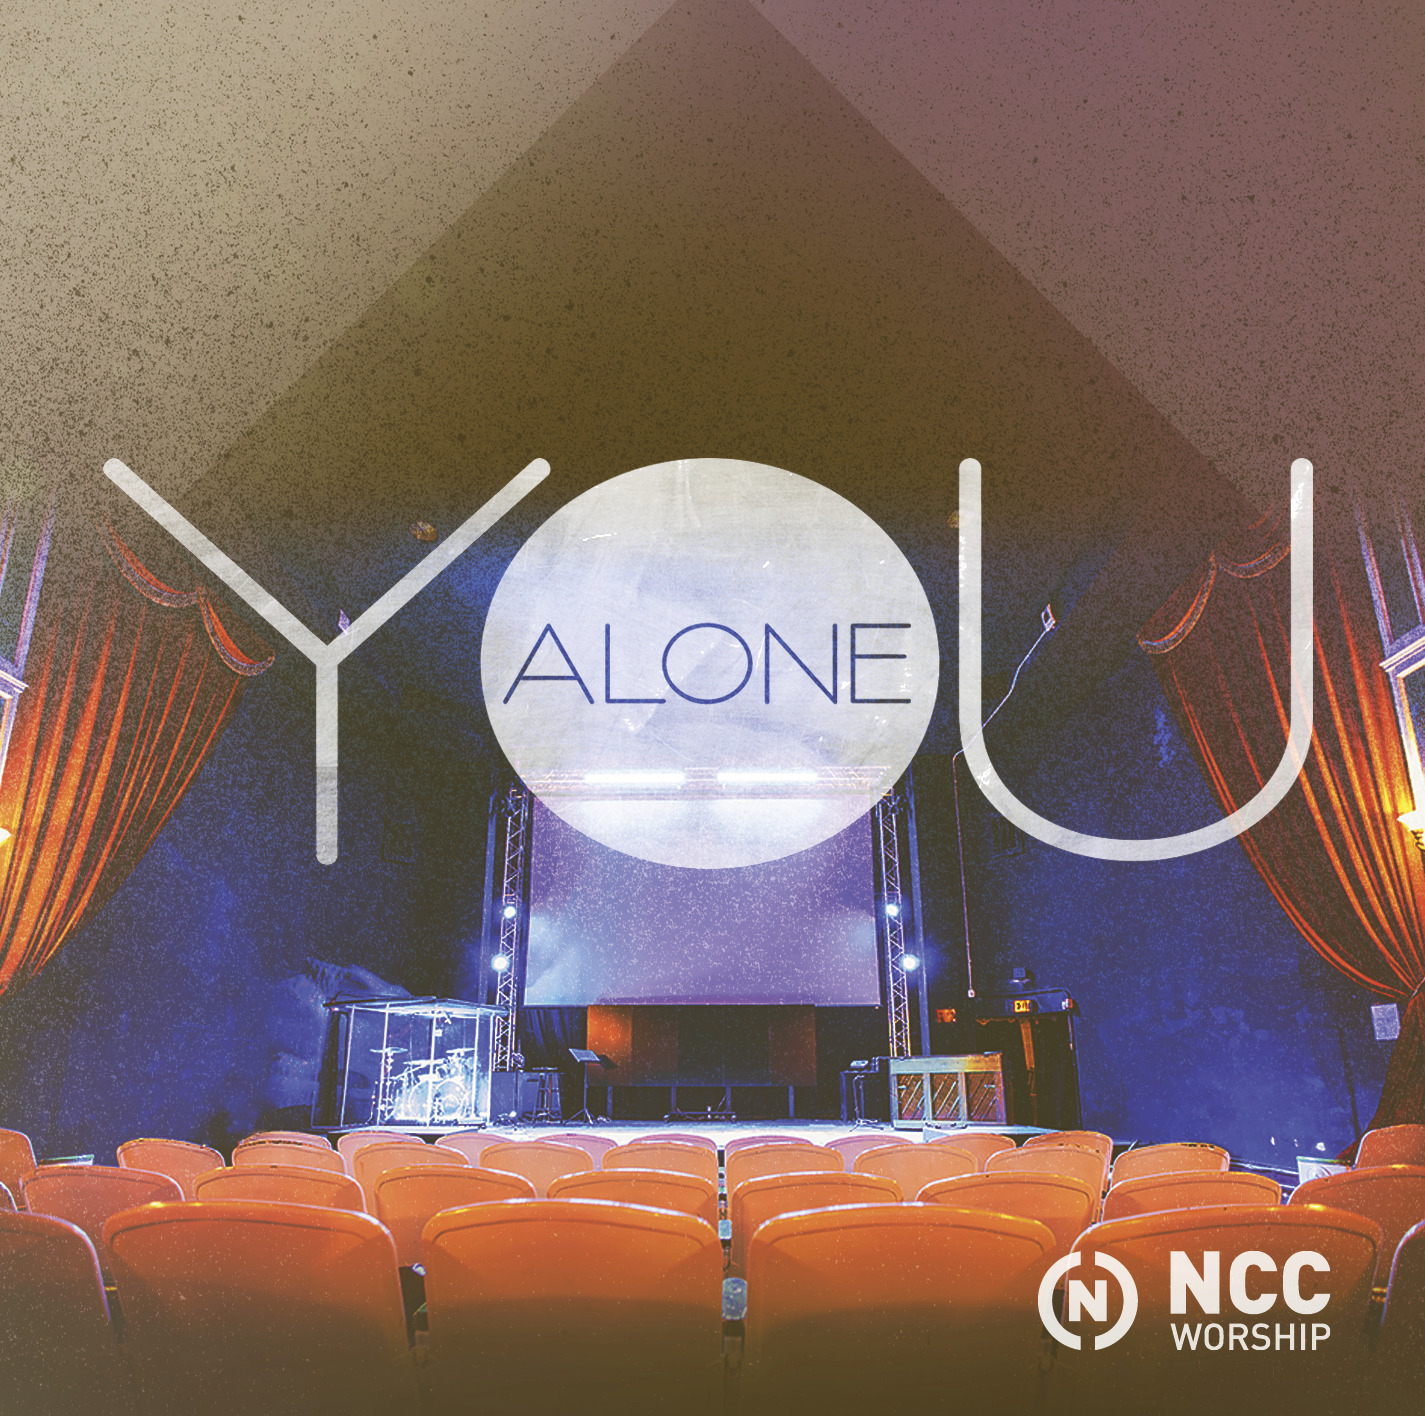 NCC Worship - You Alone